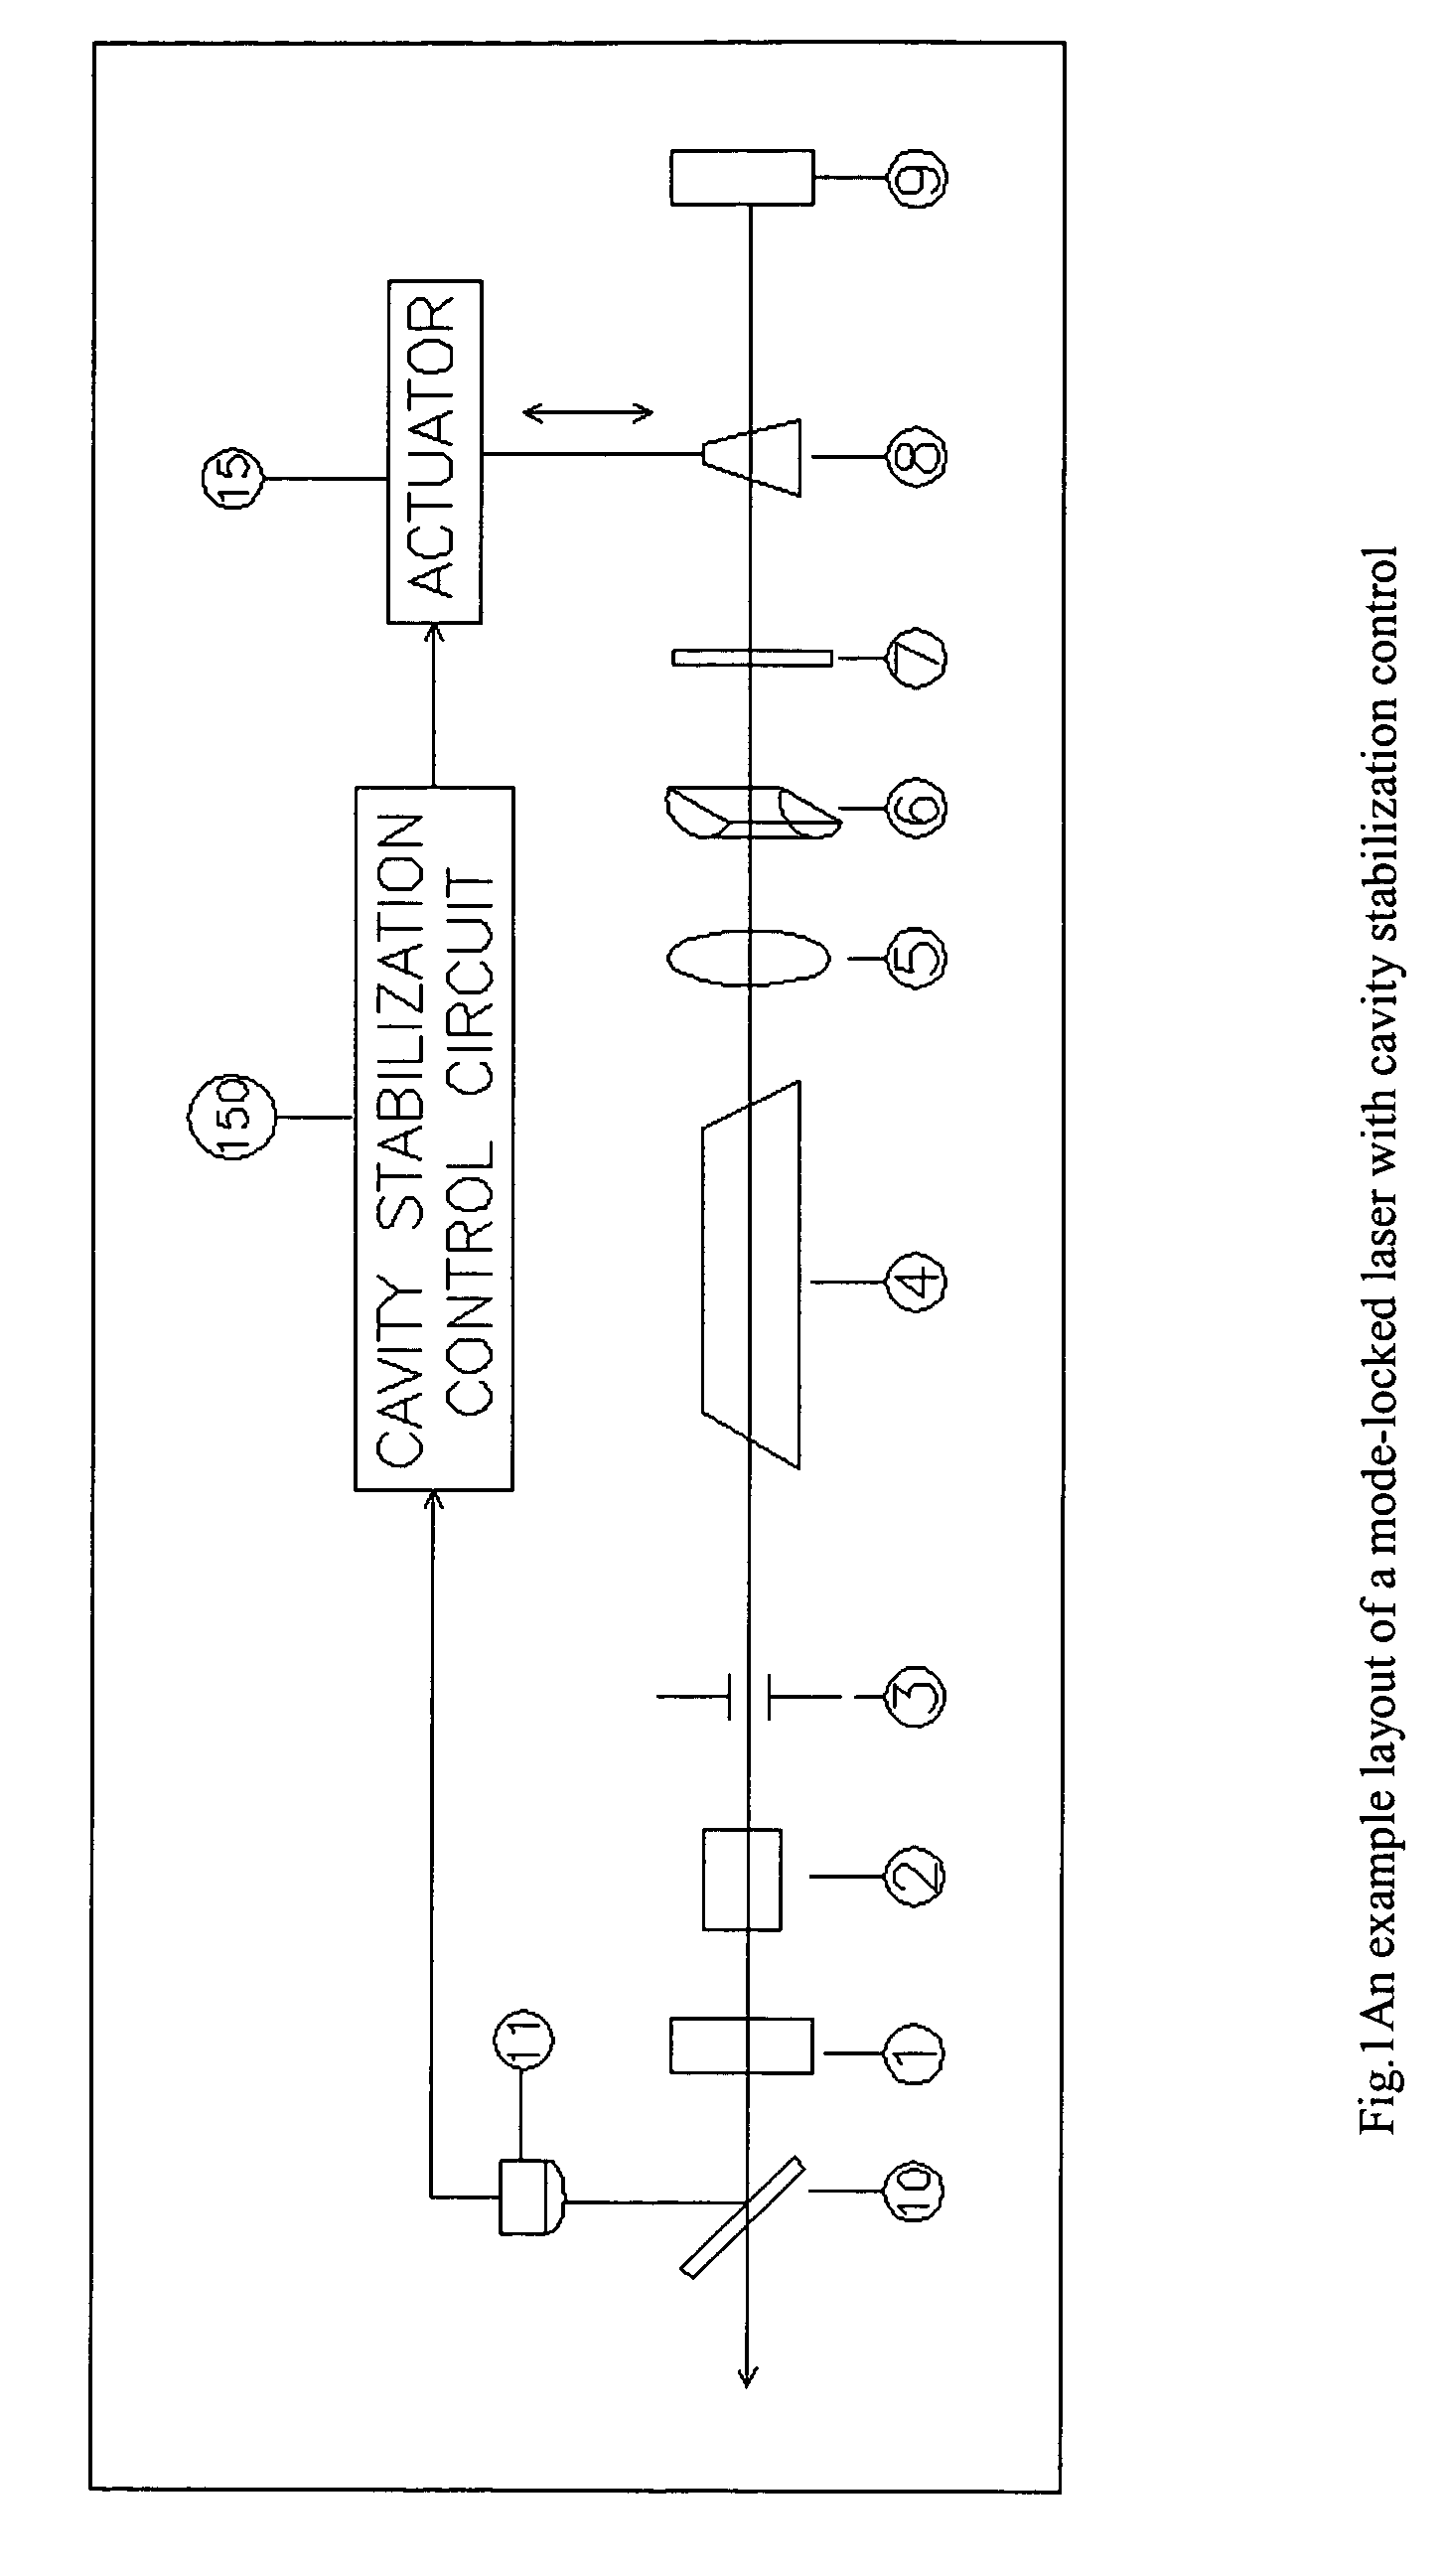 Mode-locked laser method and apparatus